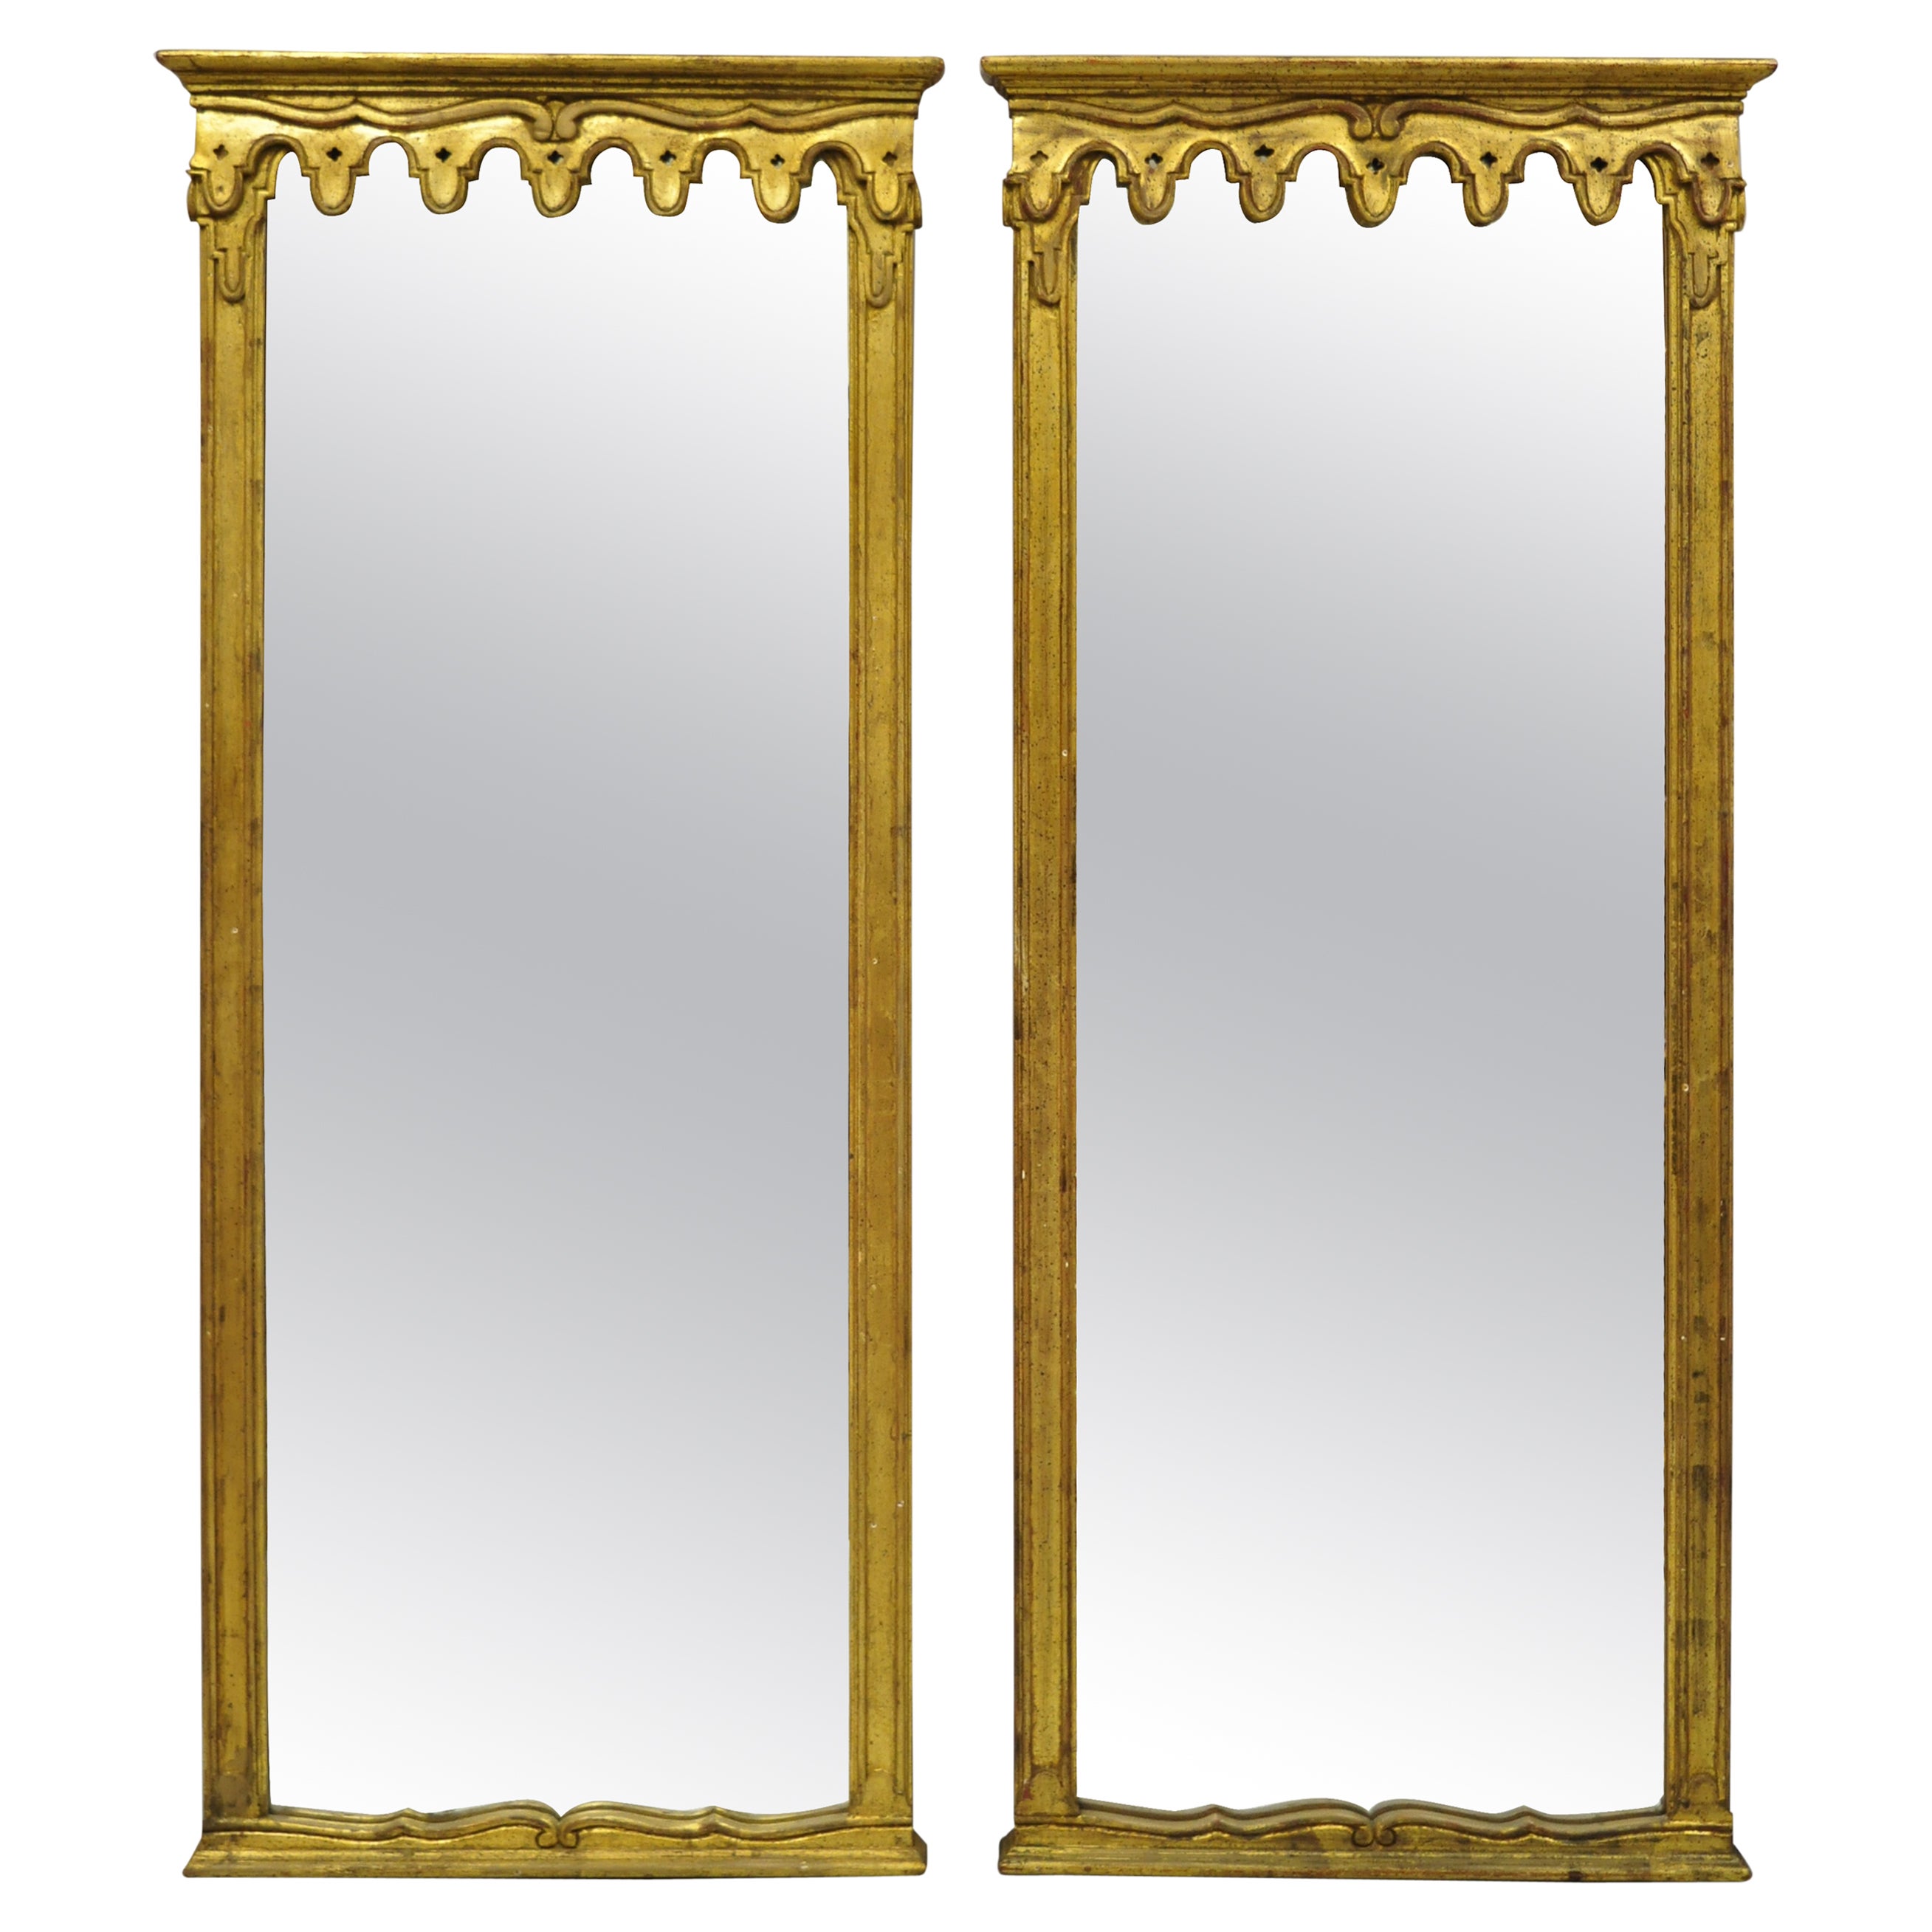 Vintage Italian Hollywood Regency Gold Giltwood Trumeau Wall Mirrors, a Pair